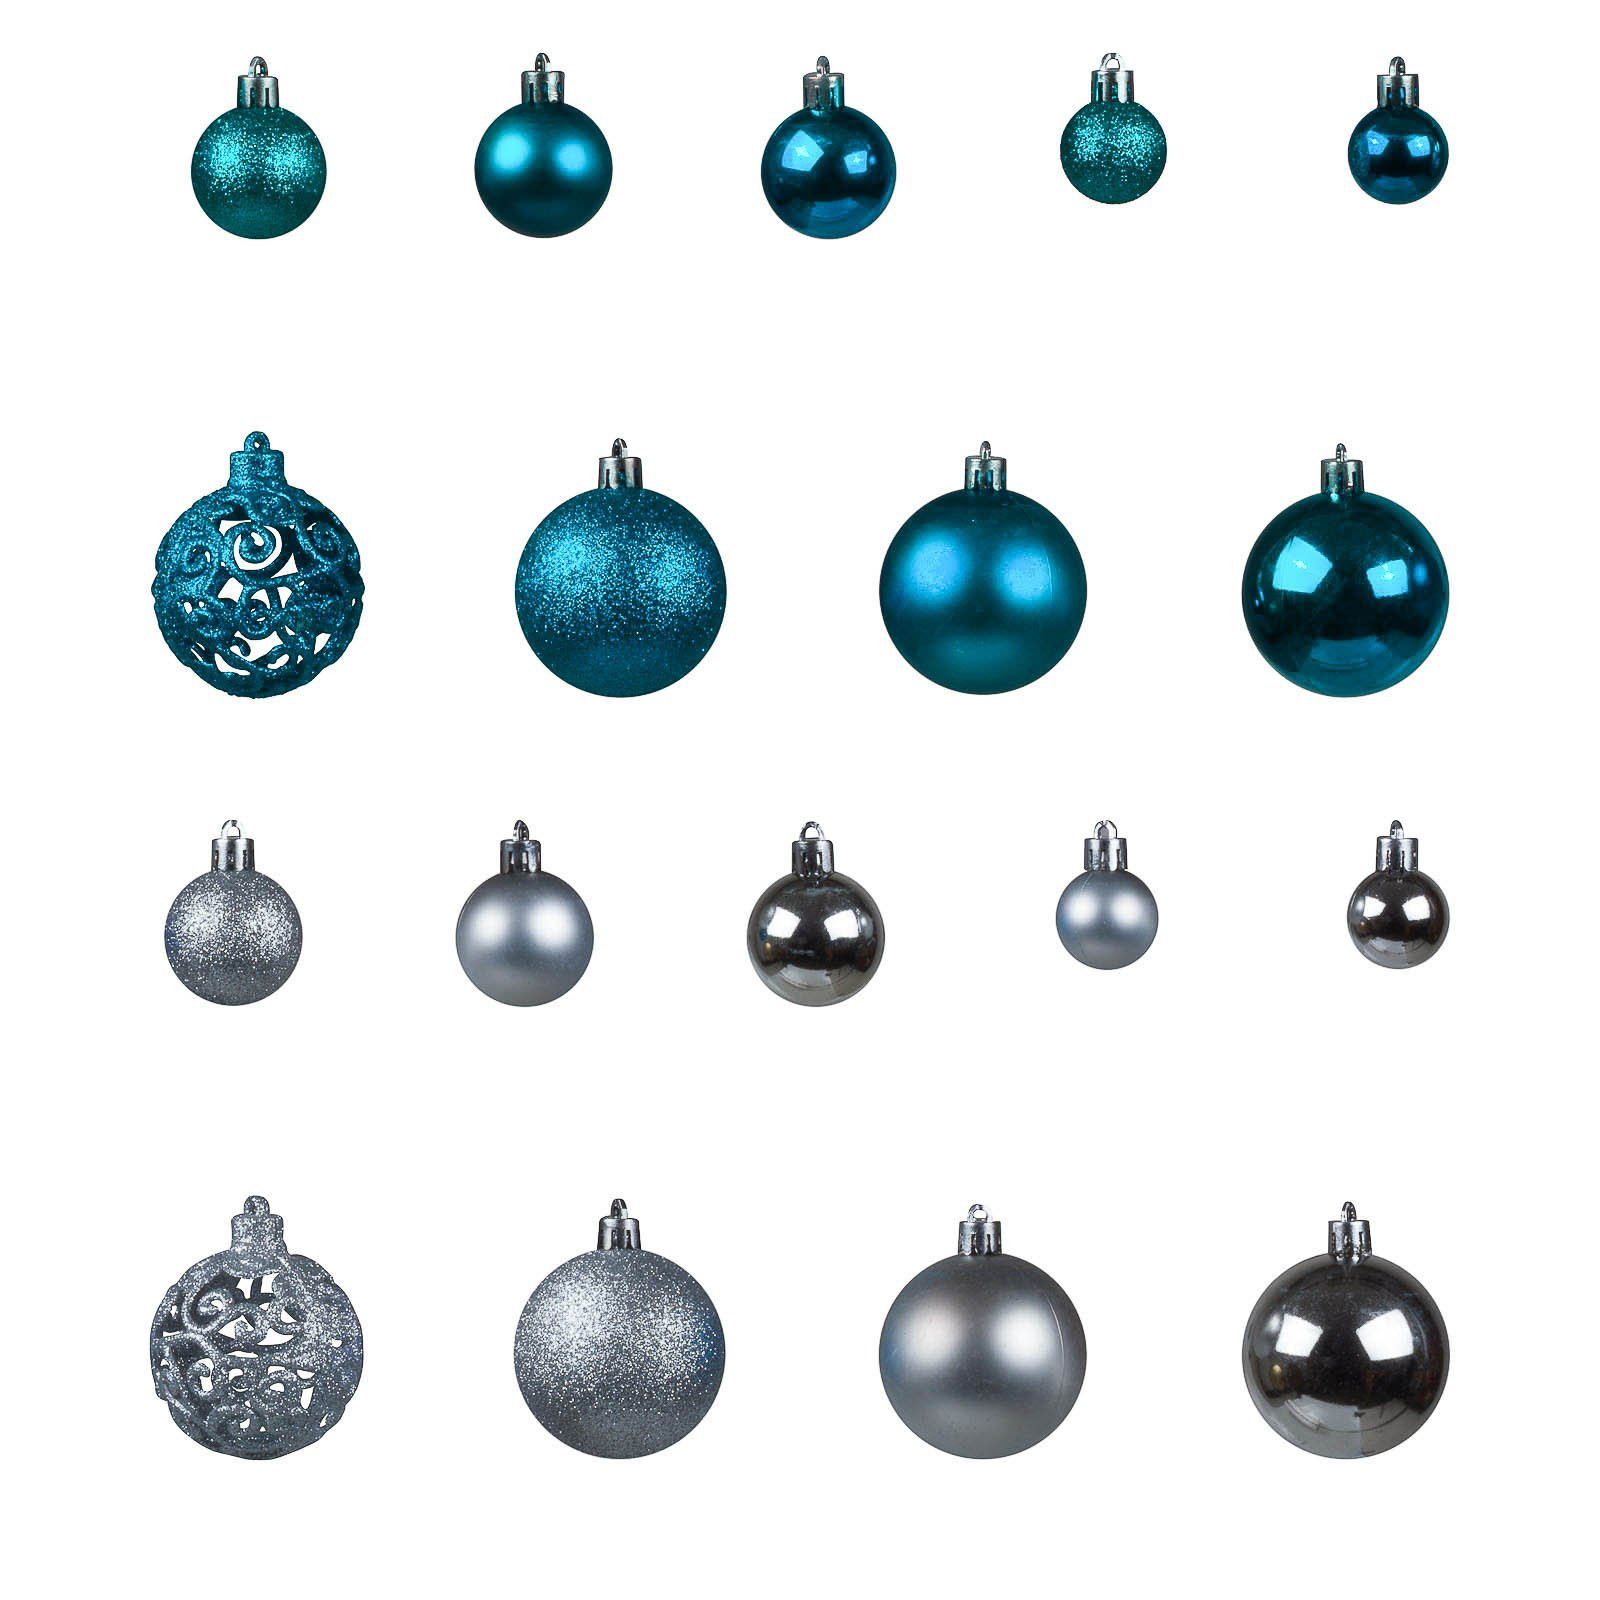 FSH Weihnachtsbaumkugel Weihnachtskugelset 100tlg Kugeln verschiedene Farben Christbaumschmuck (100 St) Aqua/Silber